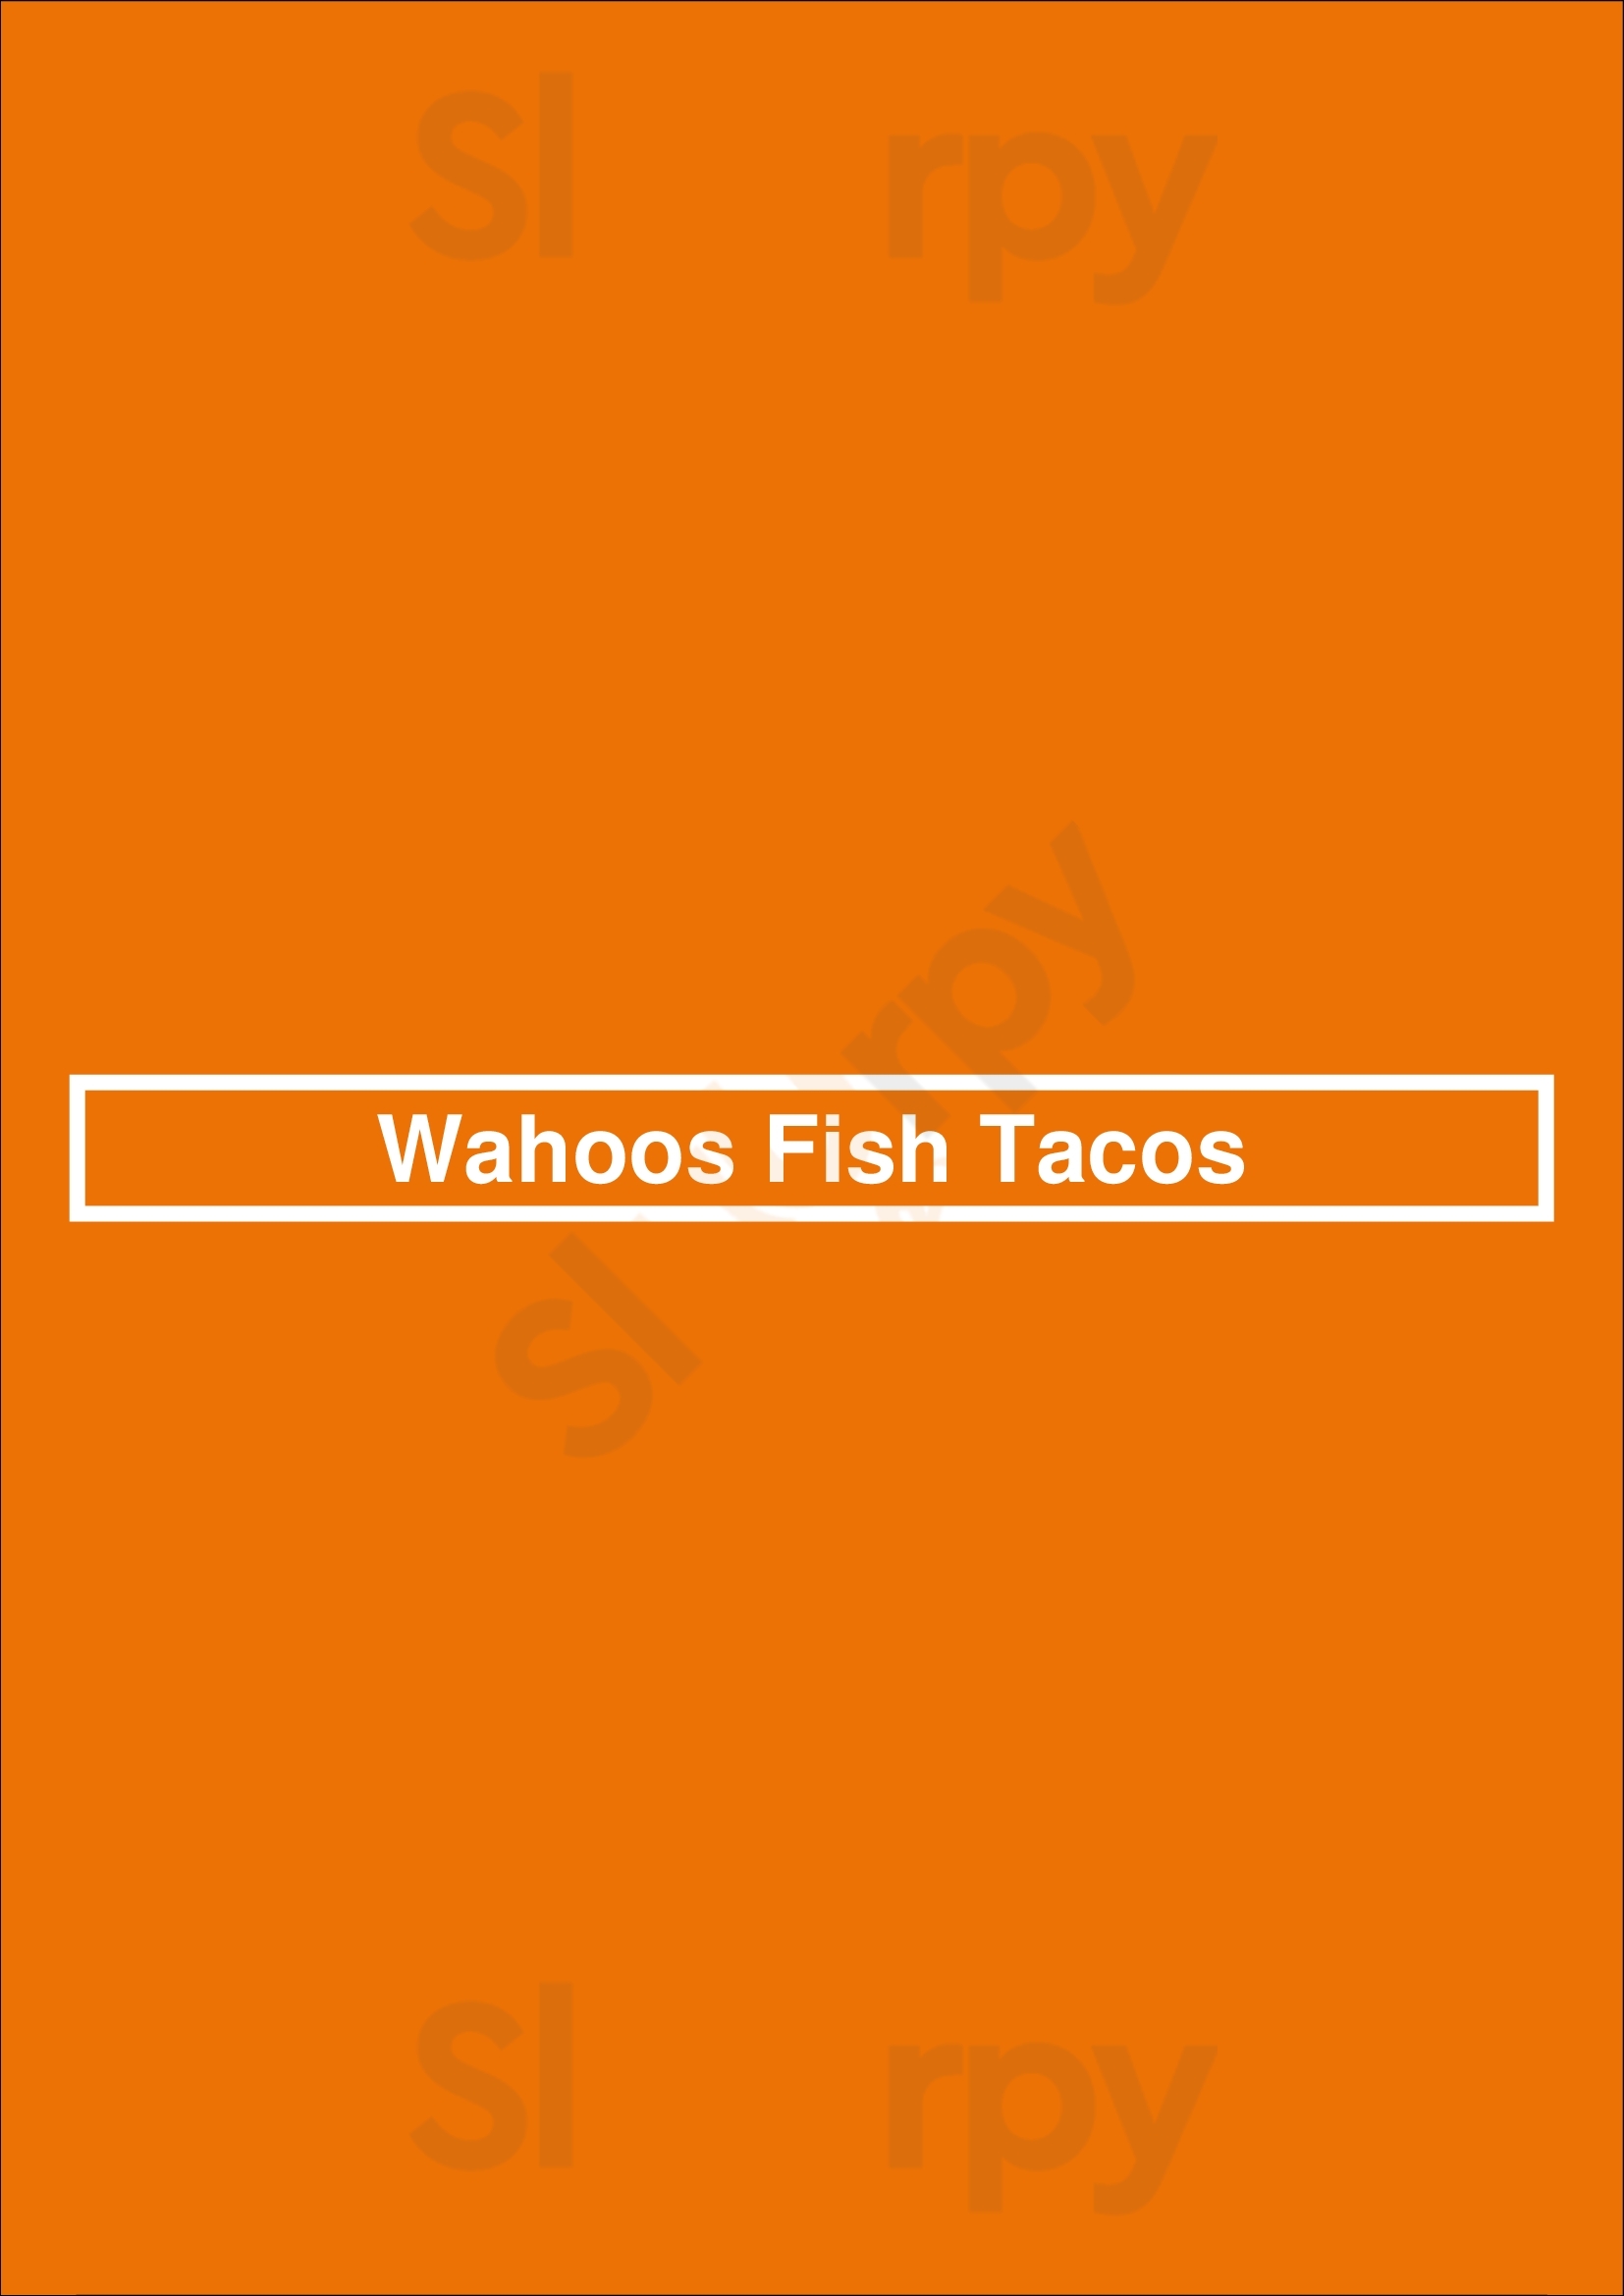 Wahoos Fish Tacos Denver Menu - 1